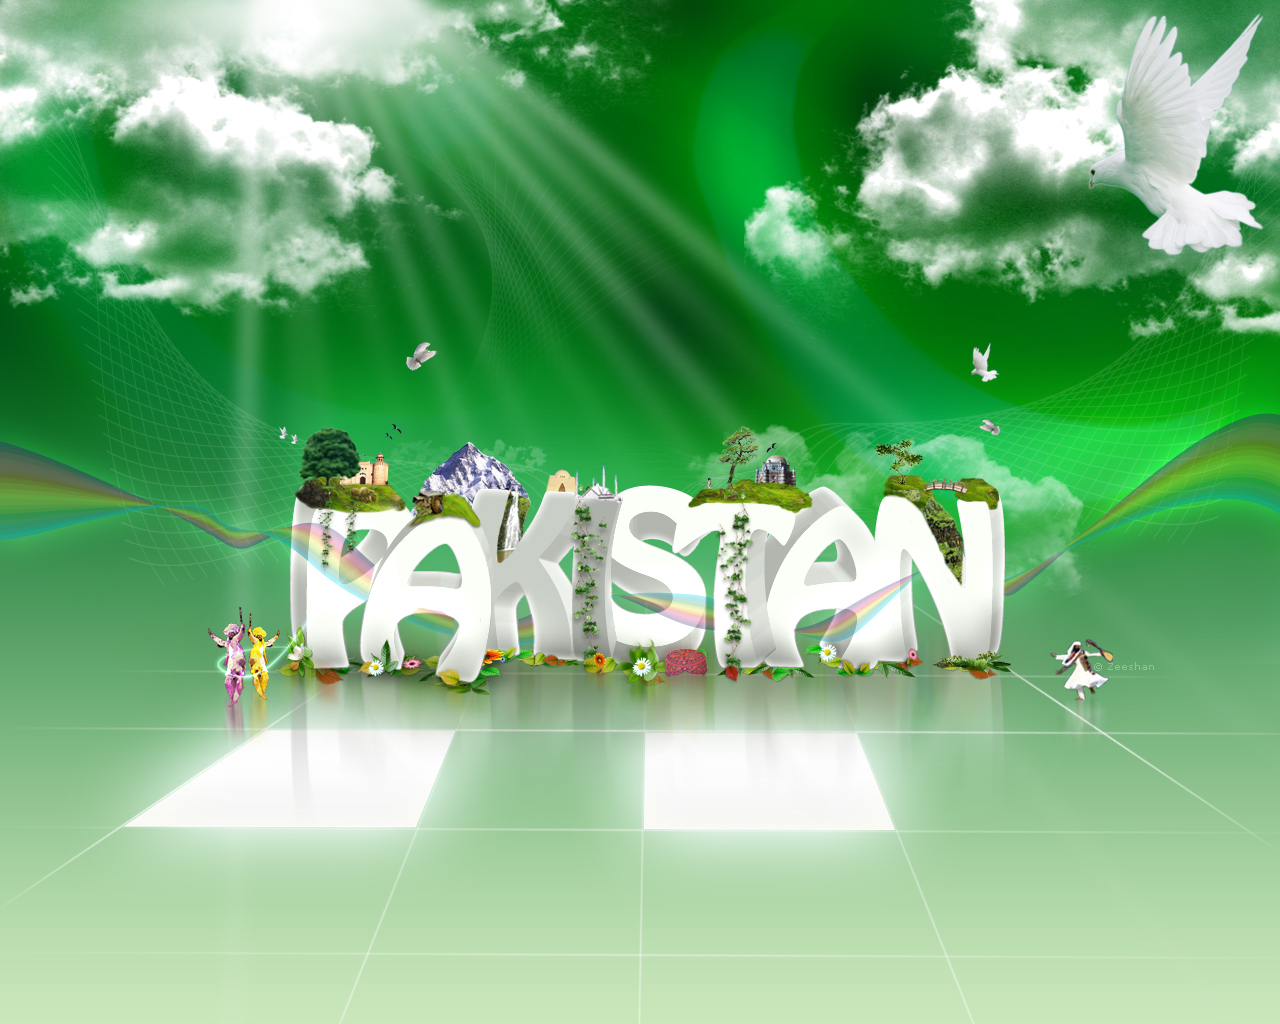 Wallpaper Pakistan Flag Desktop